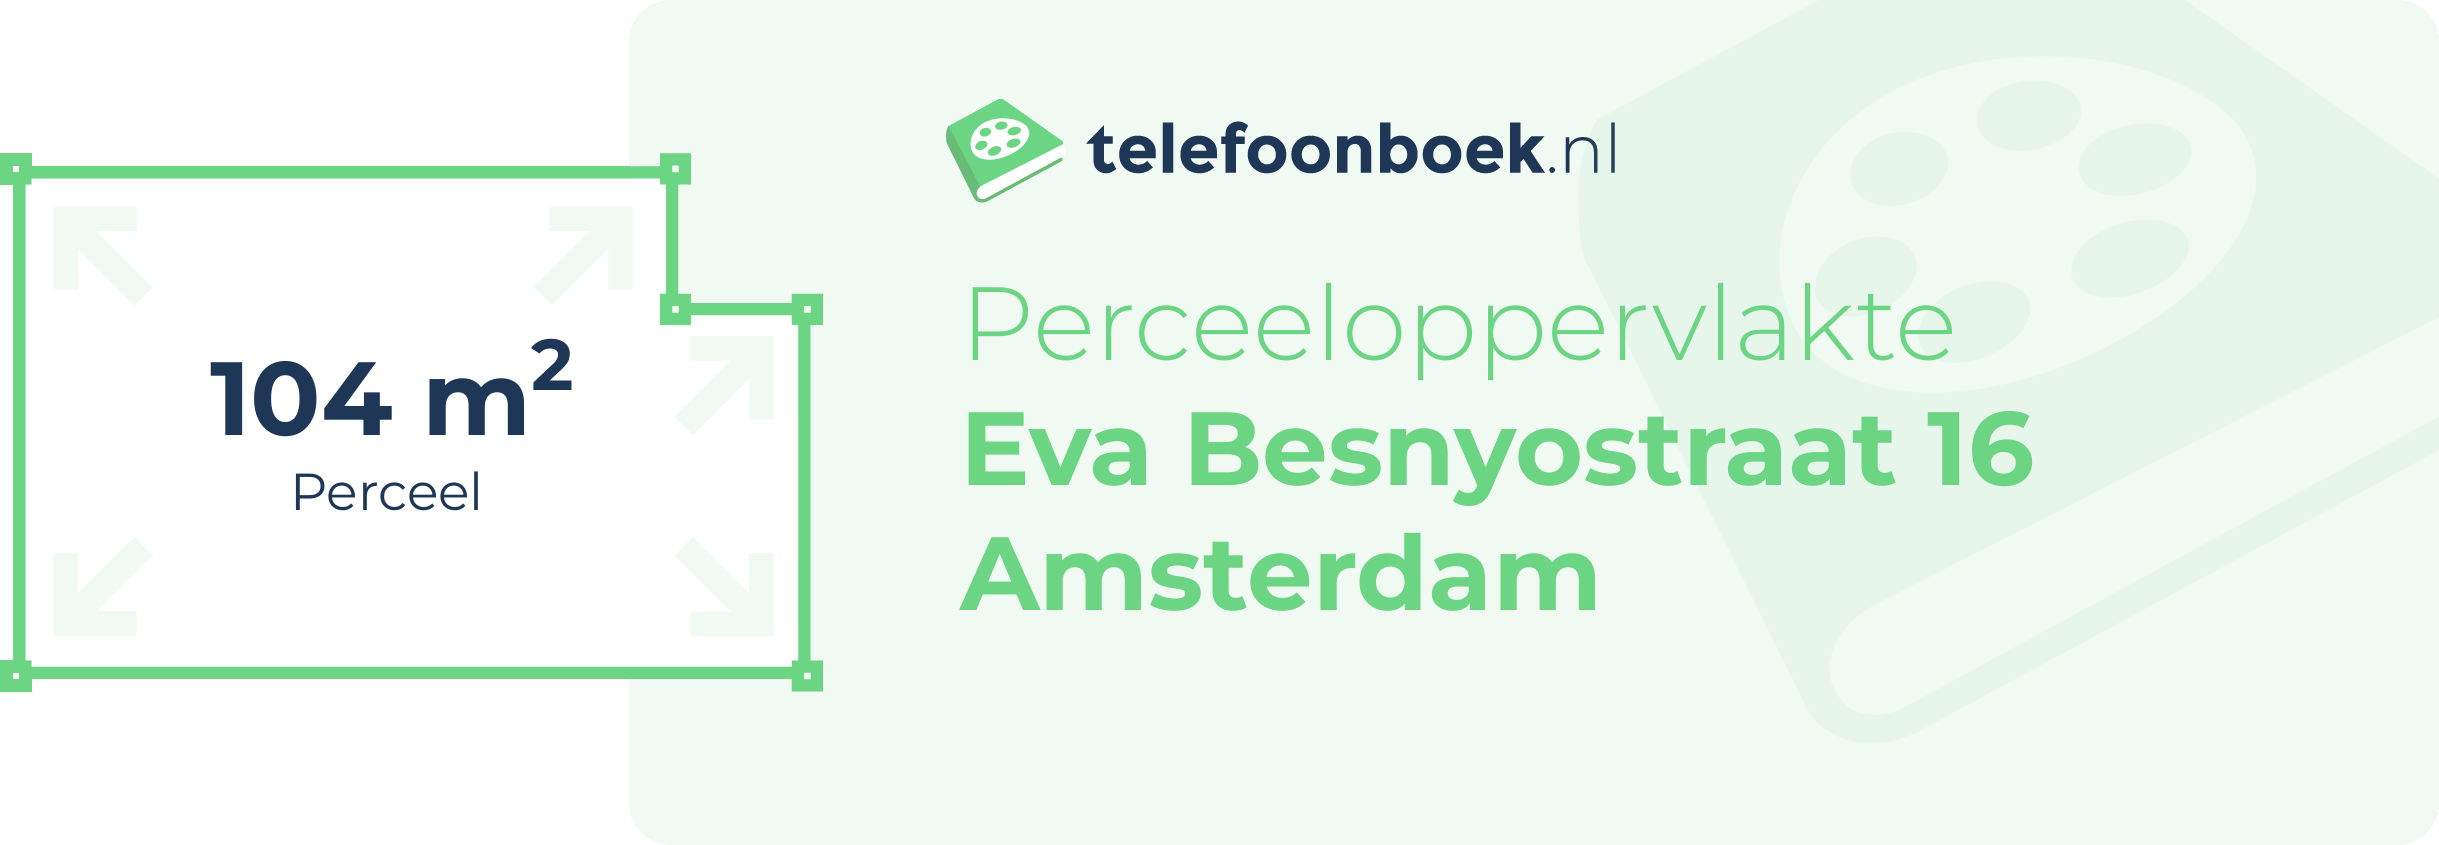 Perceeloppervlakte Eva Besnyostraat 16 Amsterdam